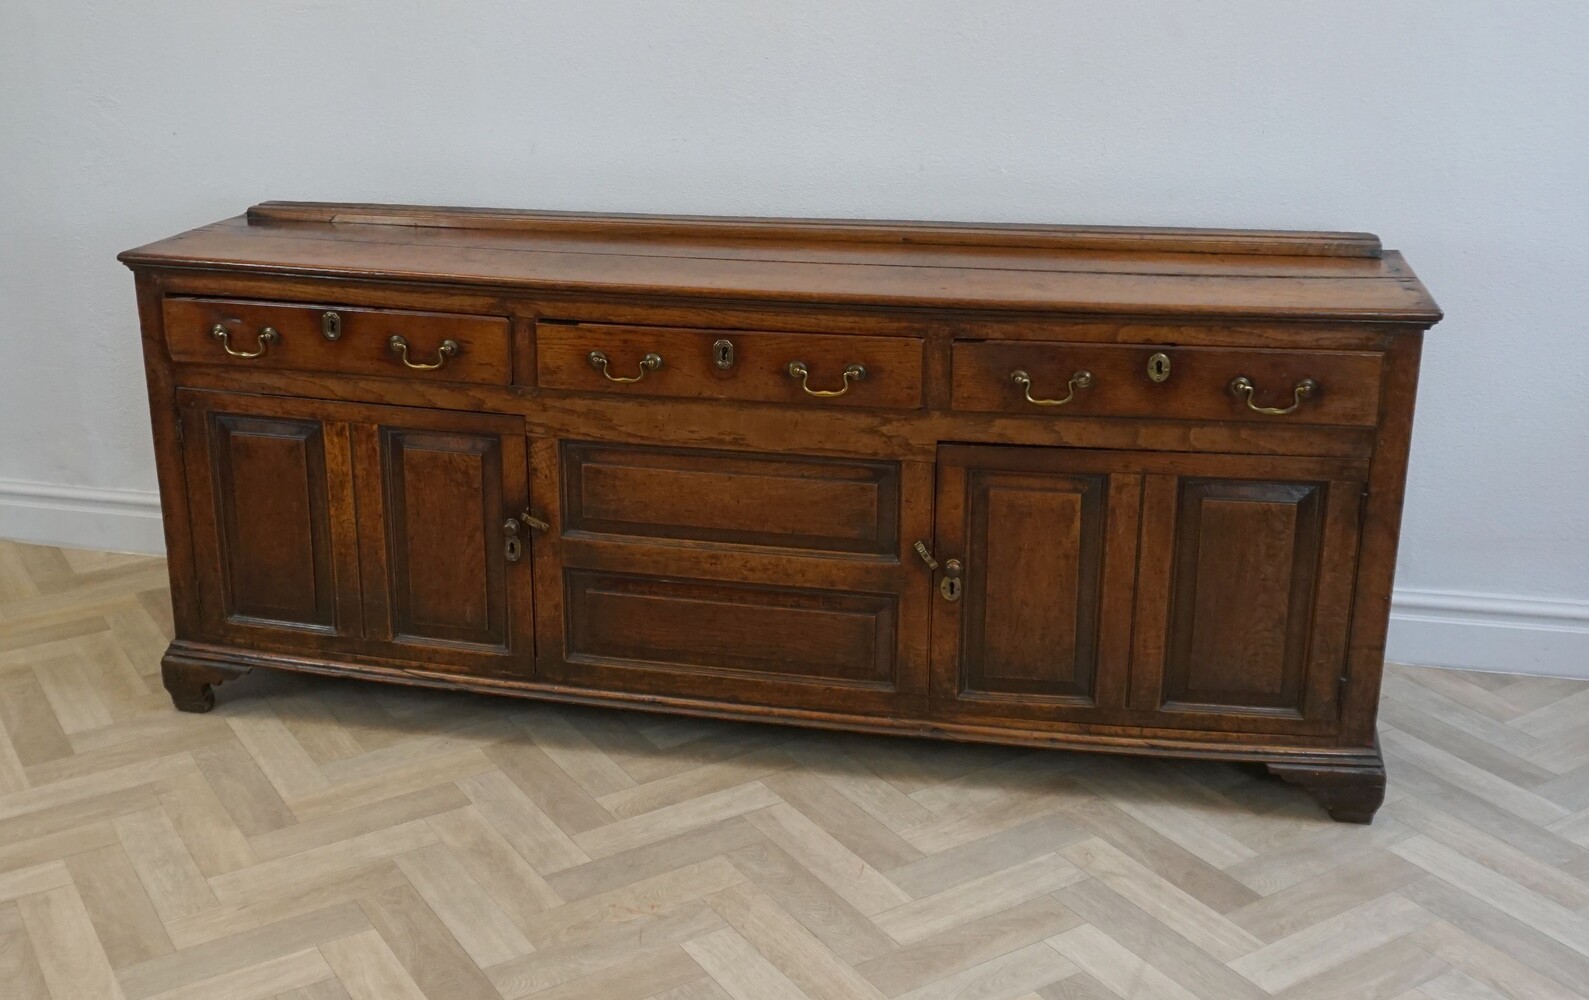 18th century Welsh DresserSOLD